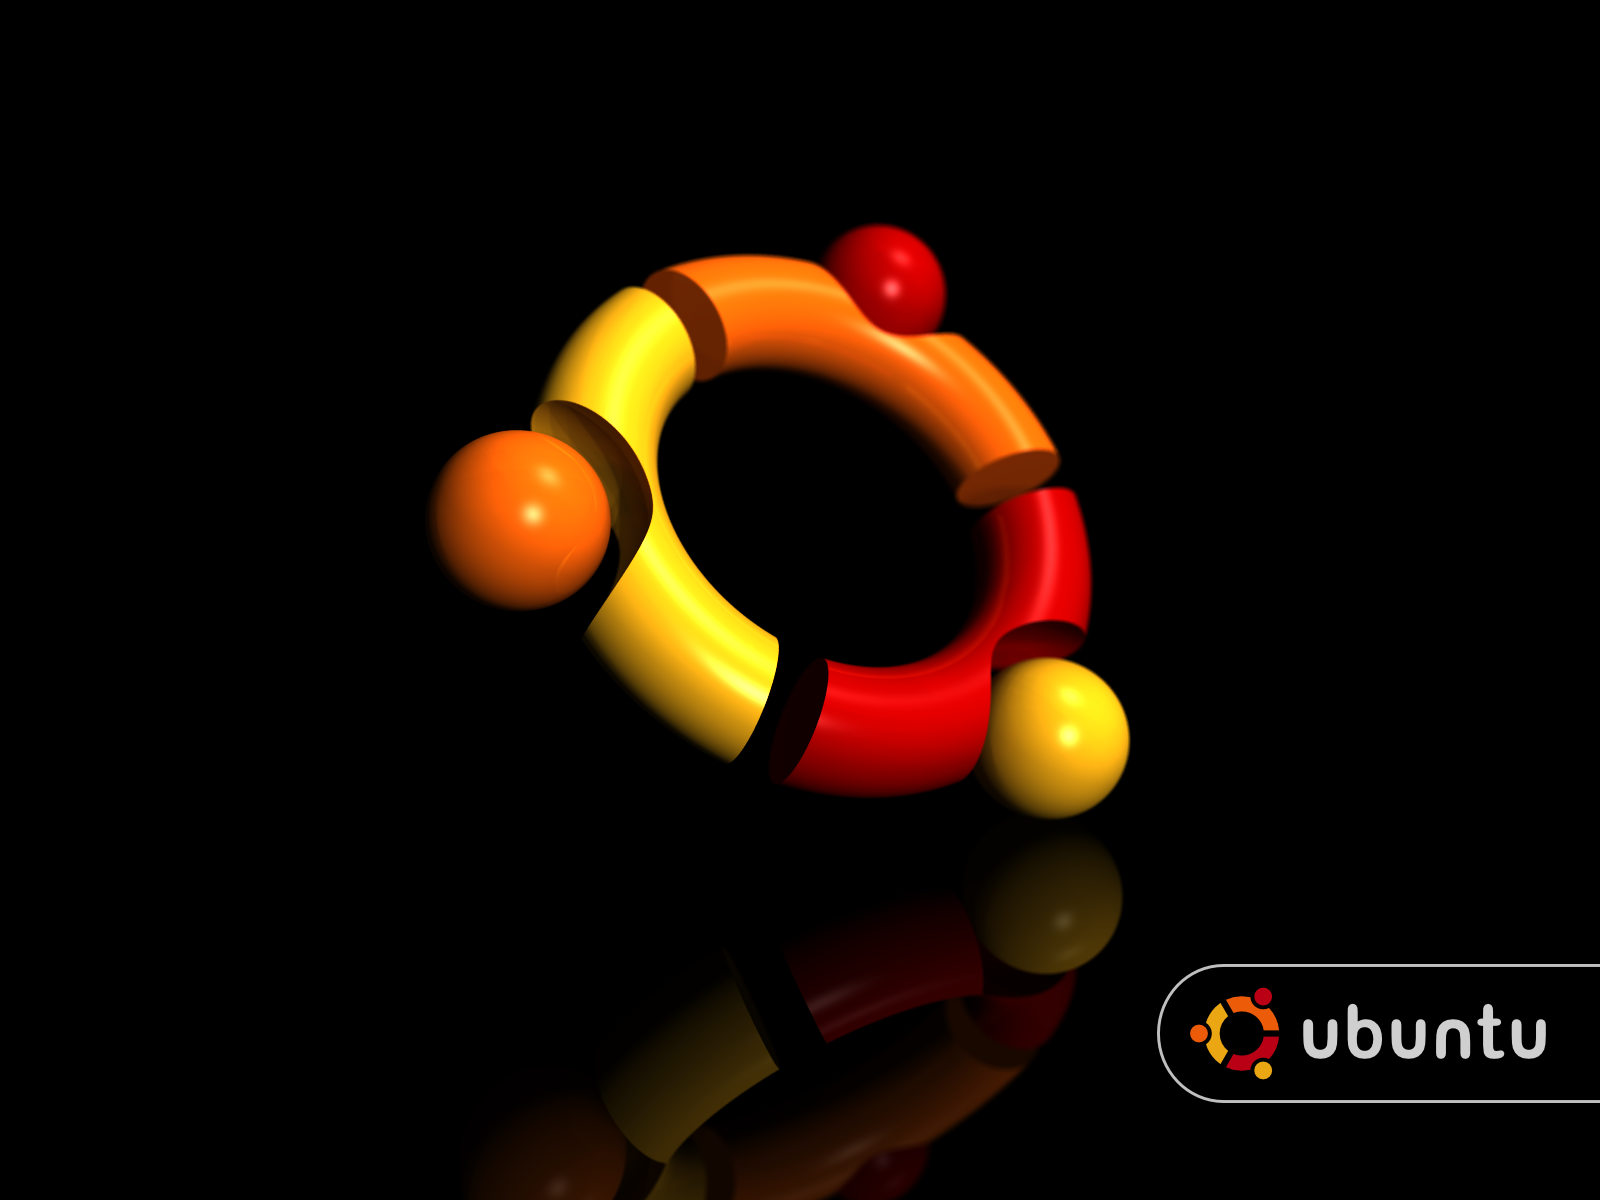 http://4.bp.blogspot.com/-kpWrpBN-52I/TcavsnDwlmI/AAAAAAAAAgg/R1JY_2opjag/s1600/ubuntu-logo-with-black-base.jpg